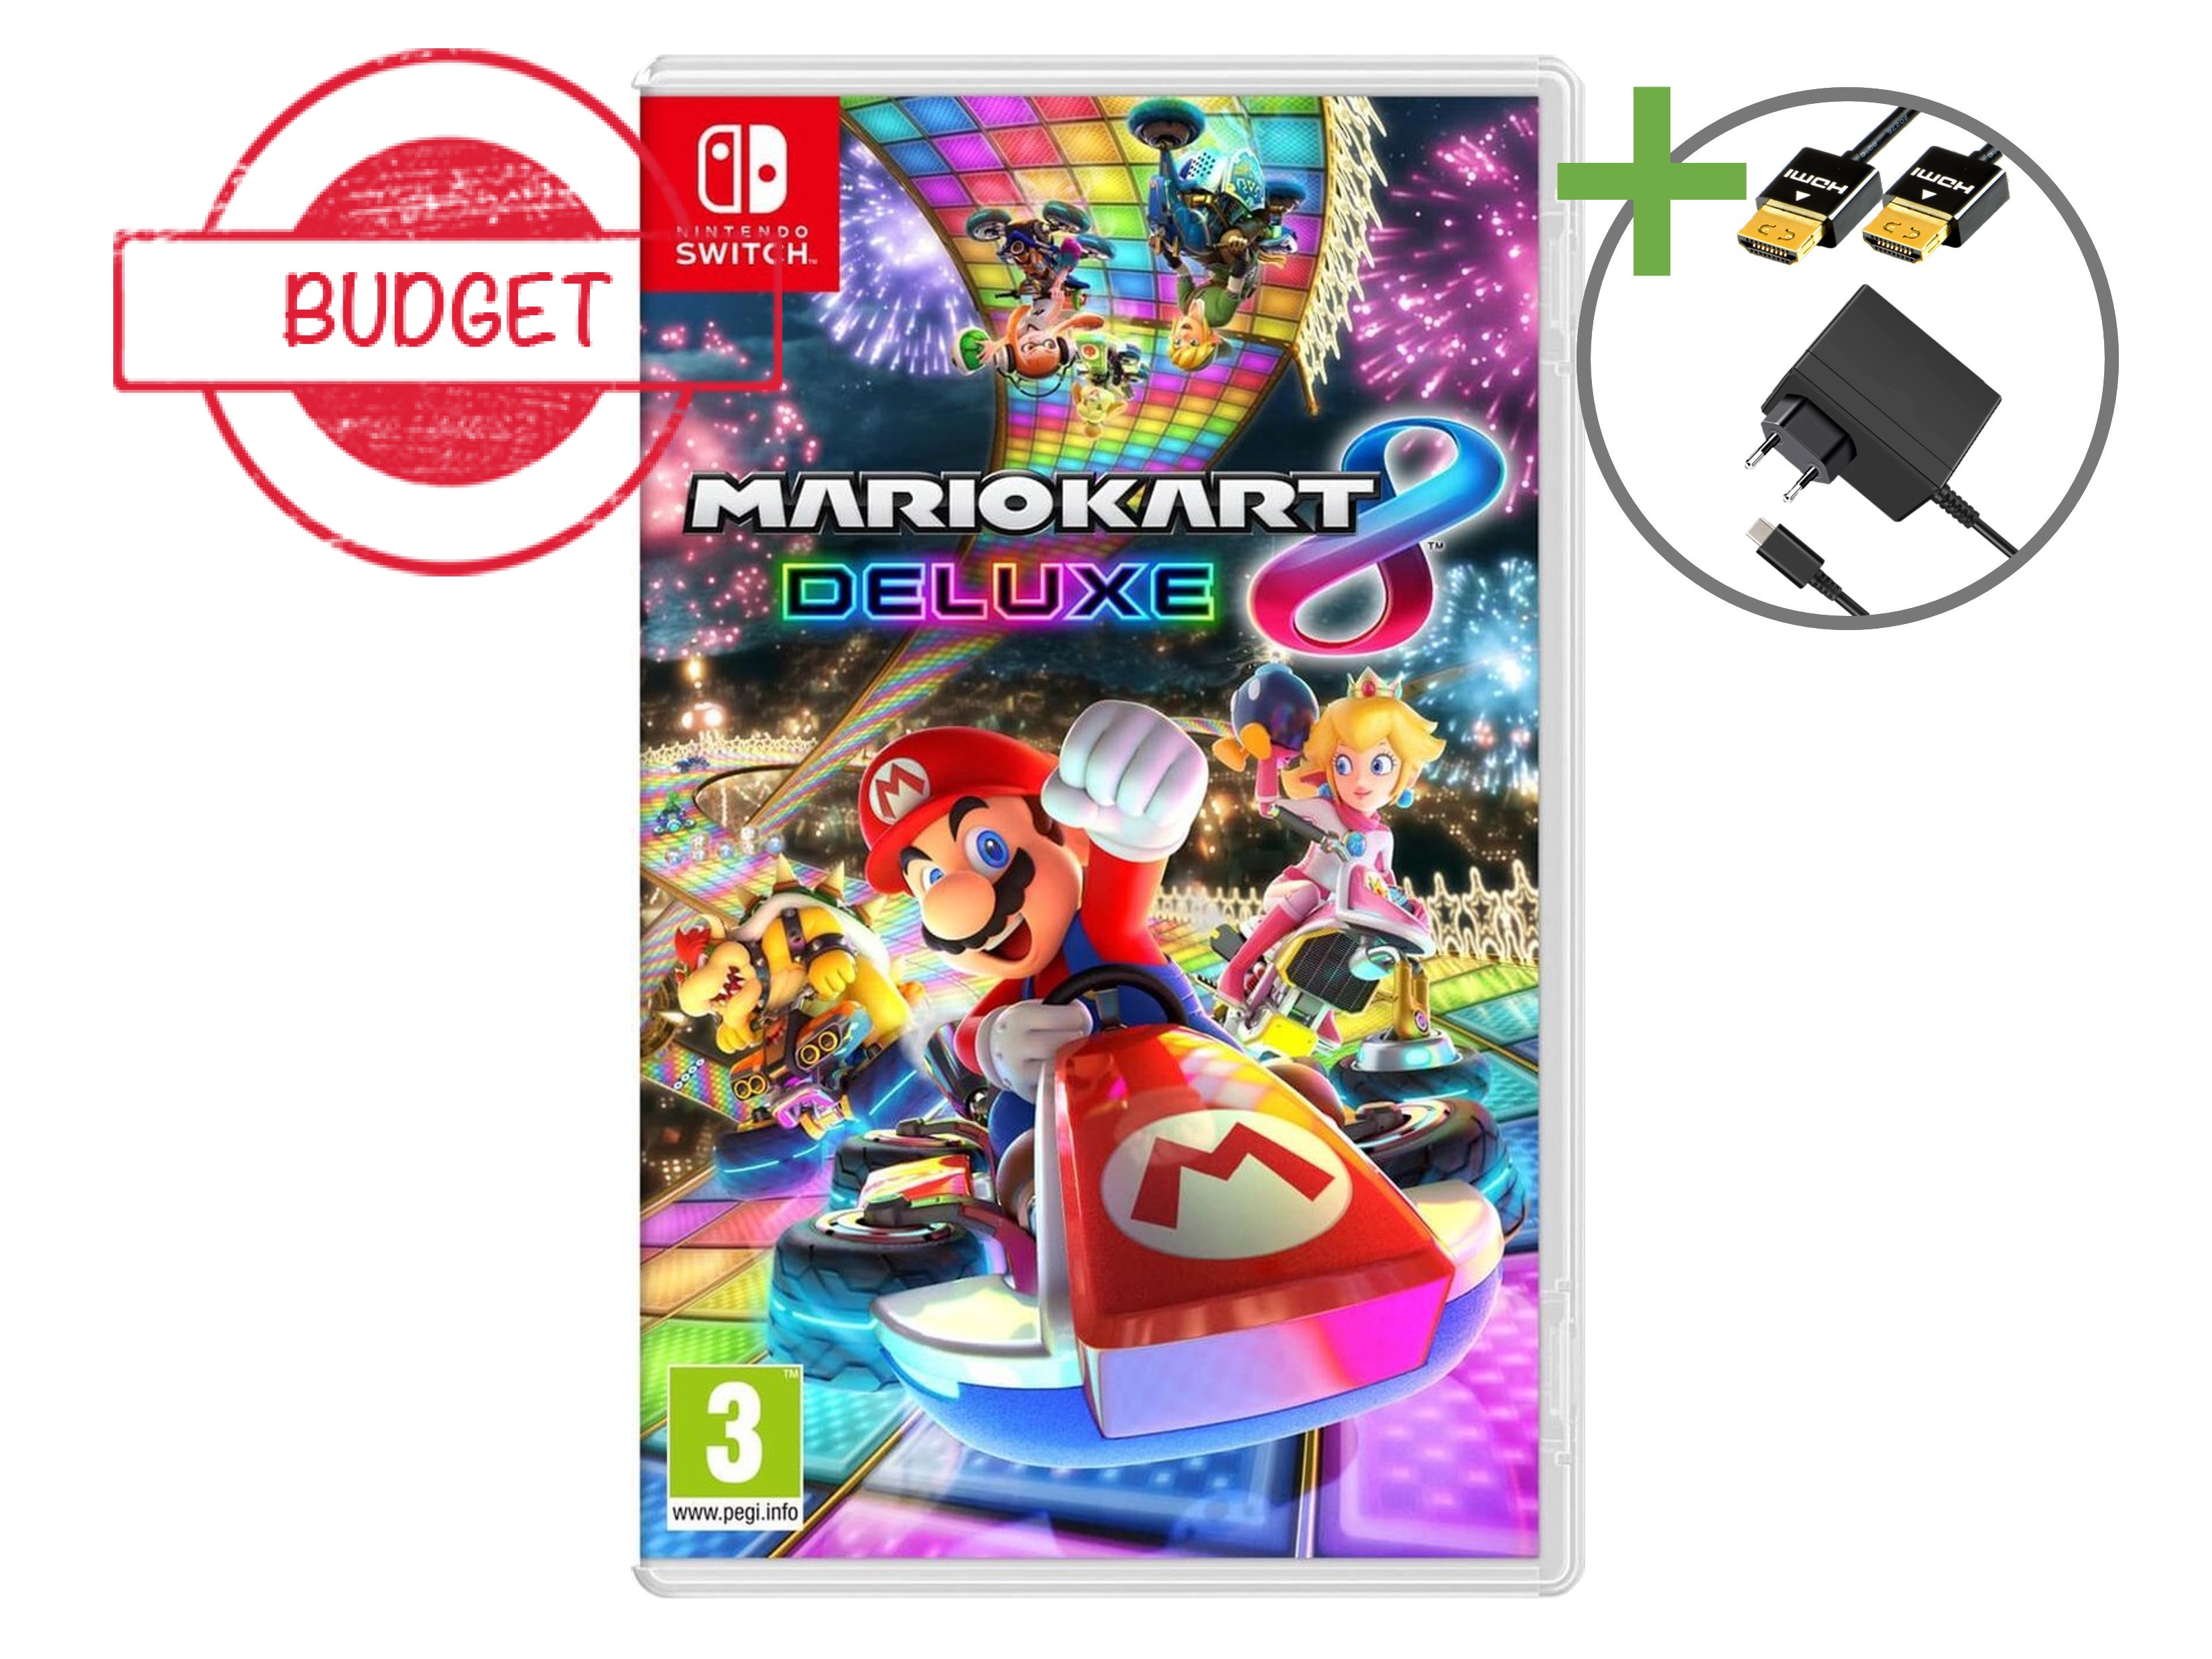 Nintendo Switch Starter Pack - Mario Kart 8 Deluxe Rood/Blauw Edition - Budget - Nintendo Switch Hardware - 5